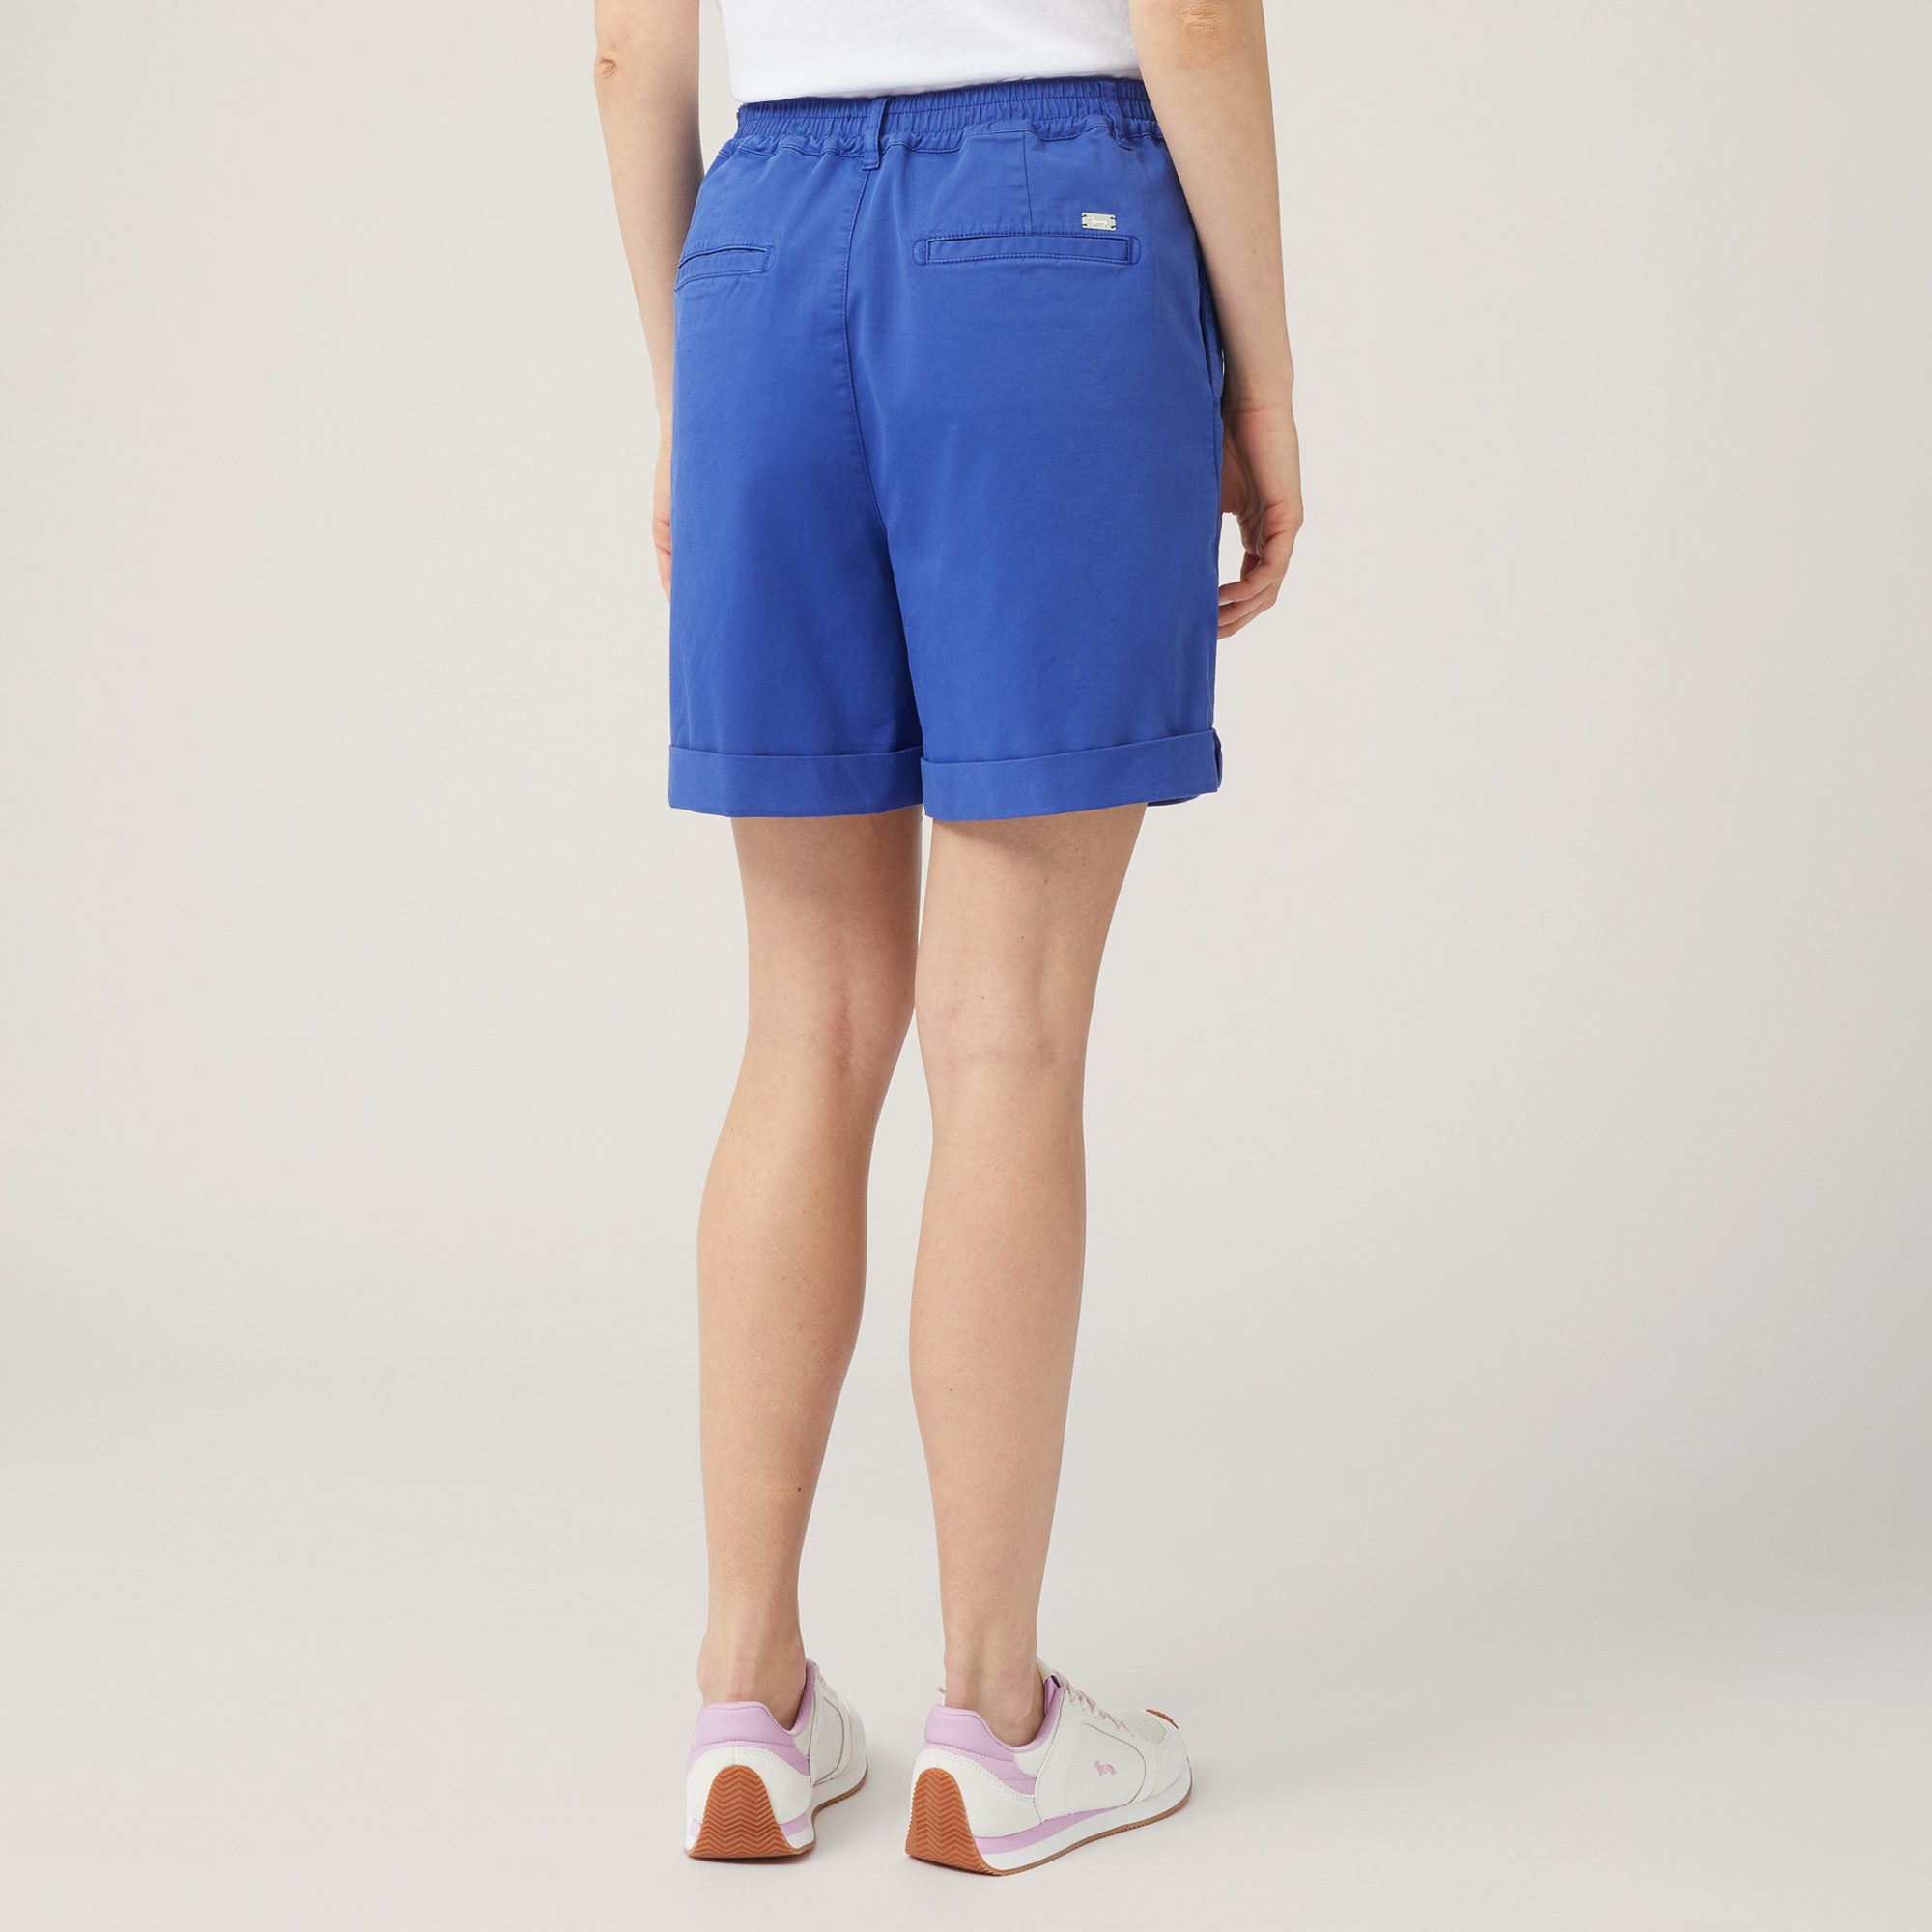 Bermuda Shorts with Elasticated Back, Blue, large image number 1